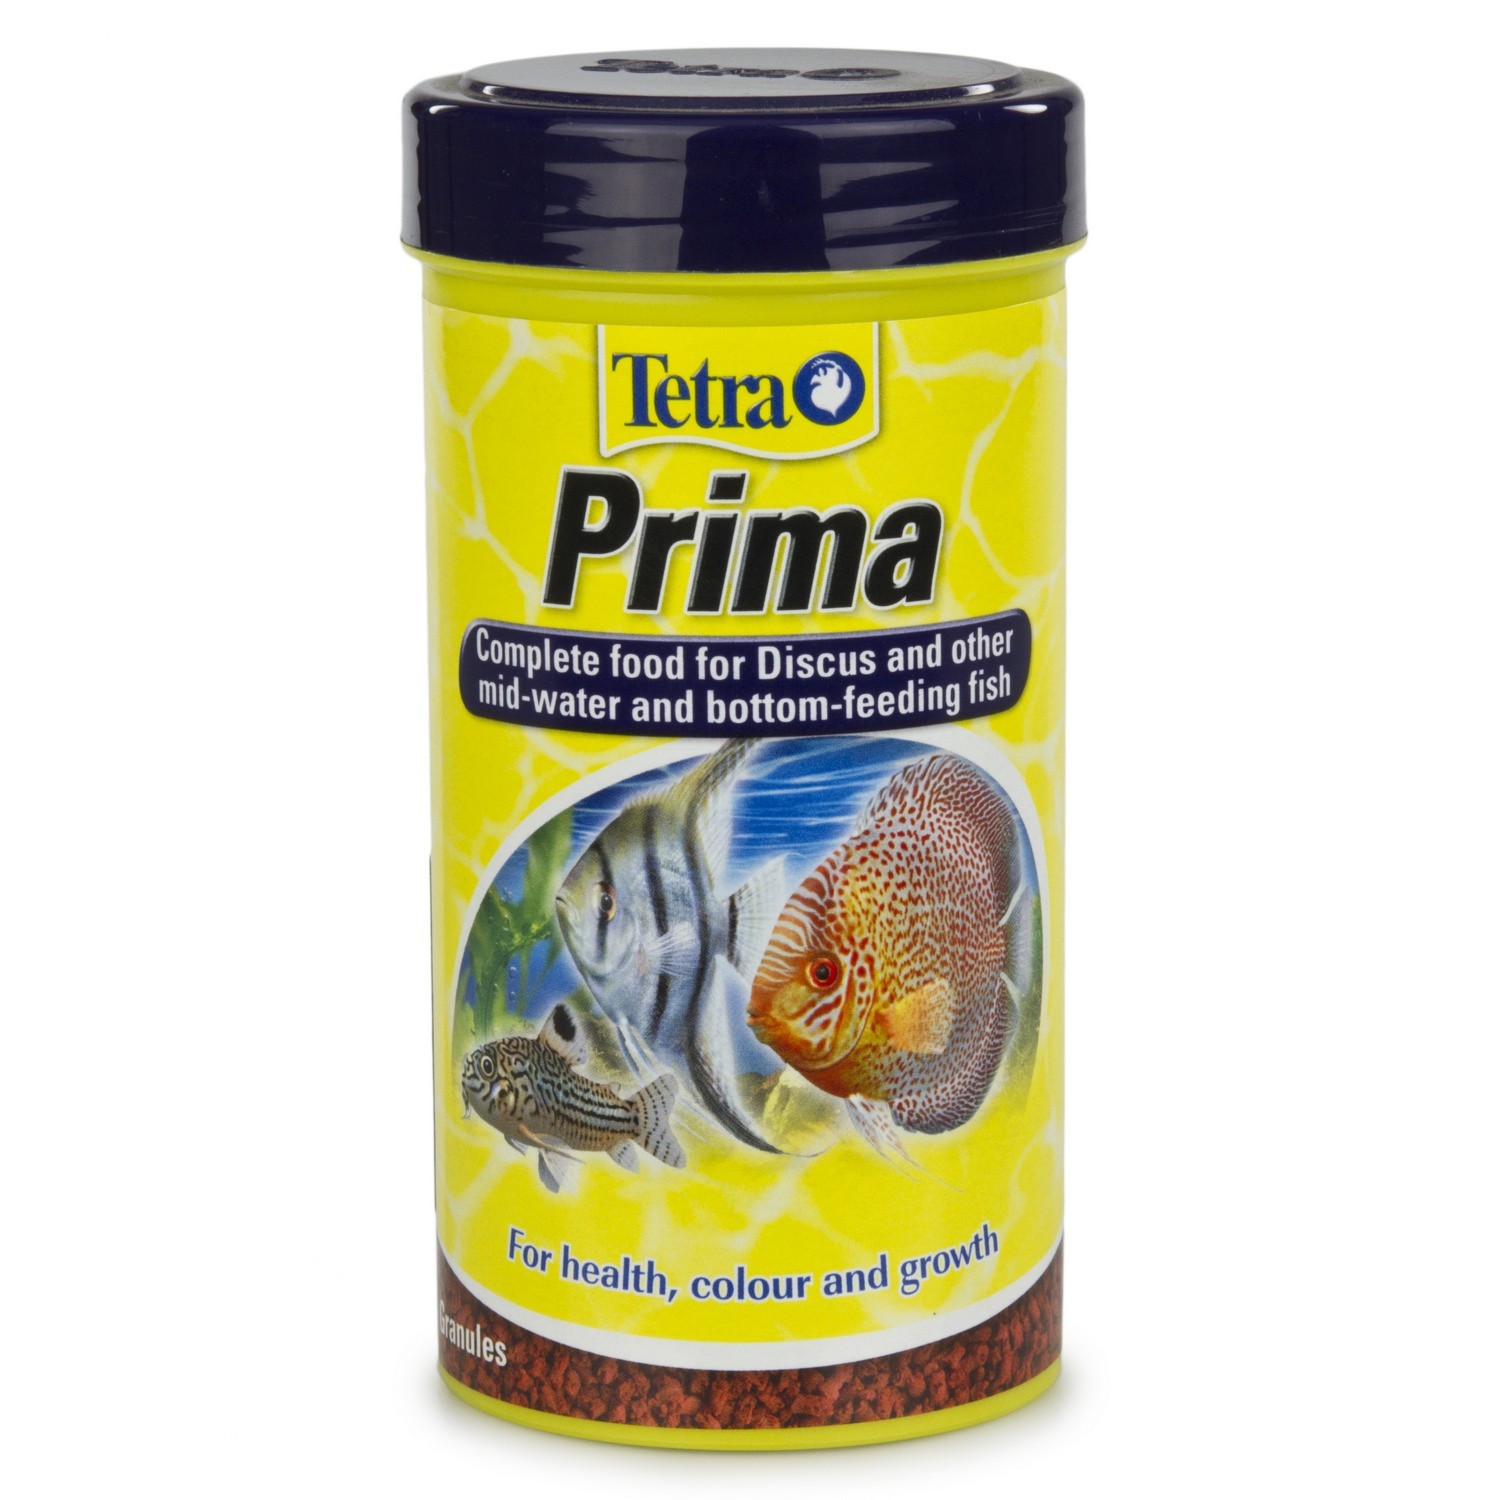 Tetra Prima Fish Food Image 1